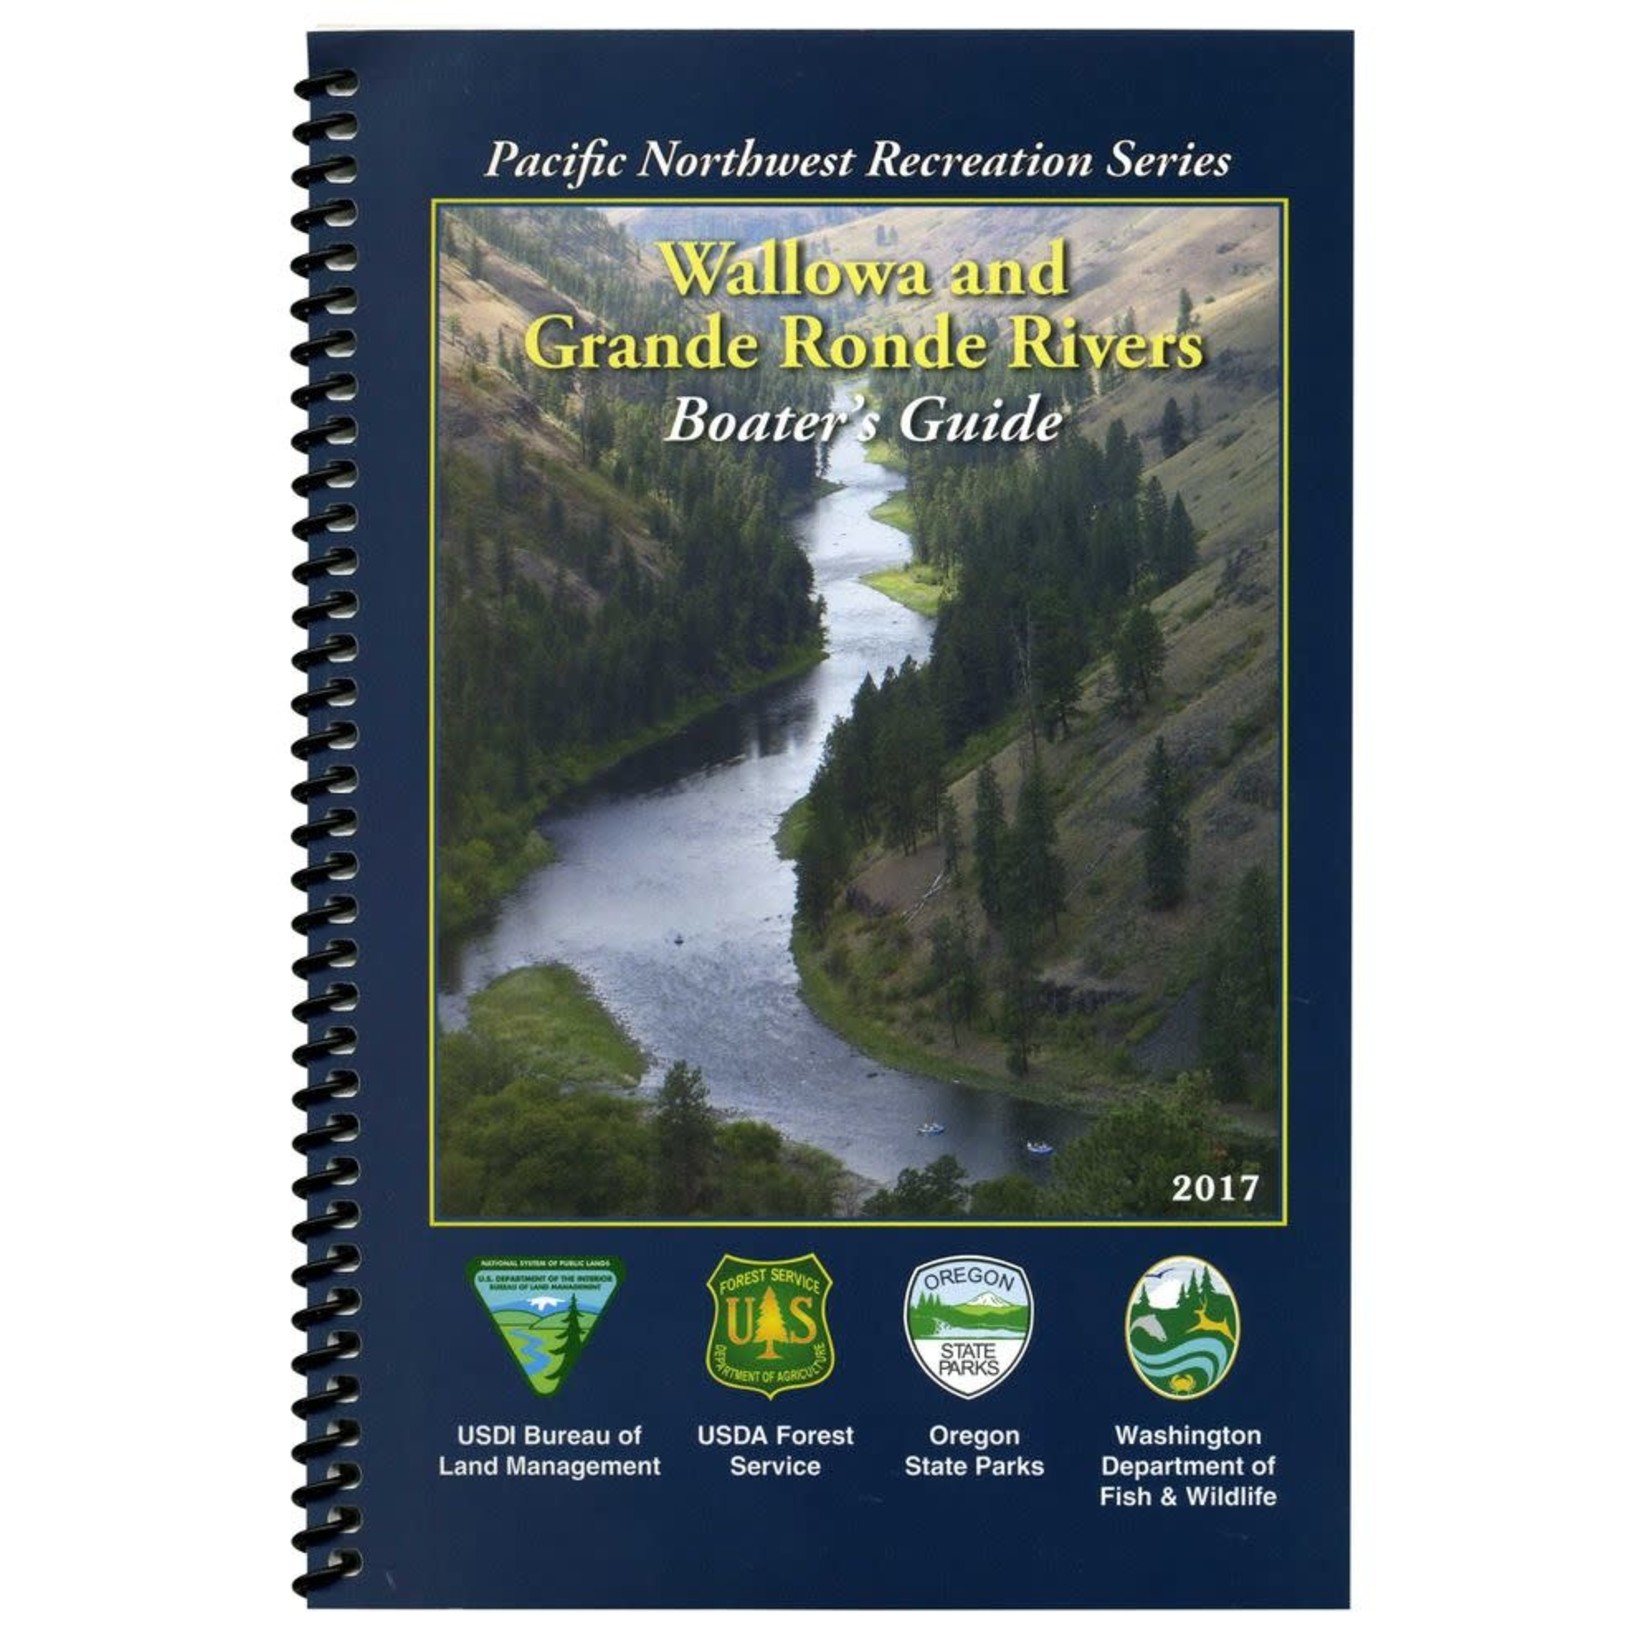 BLM Wallowa & Grande Ronde Rivers Boater's Guide Book